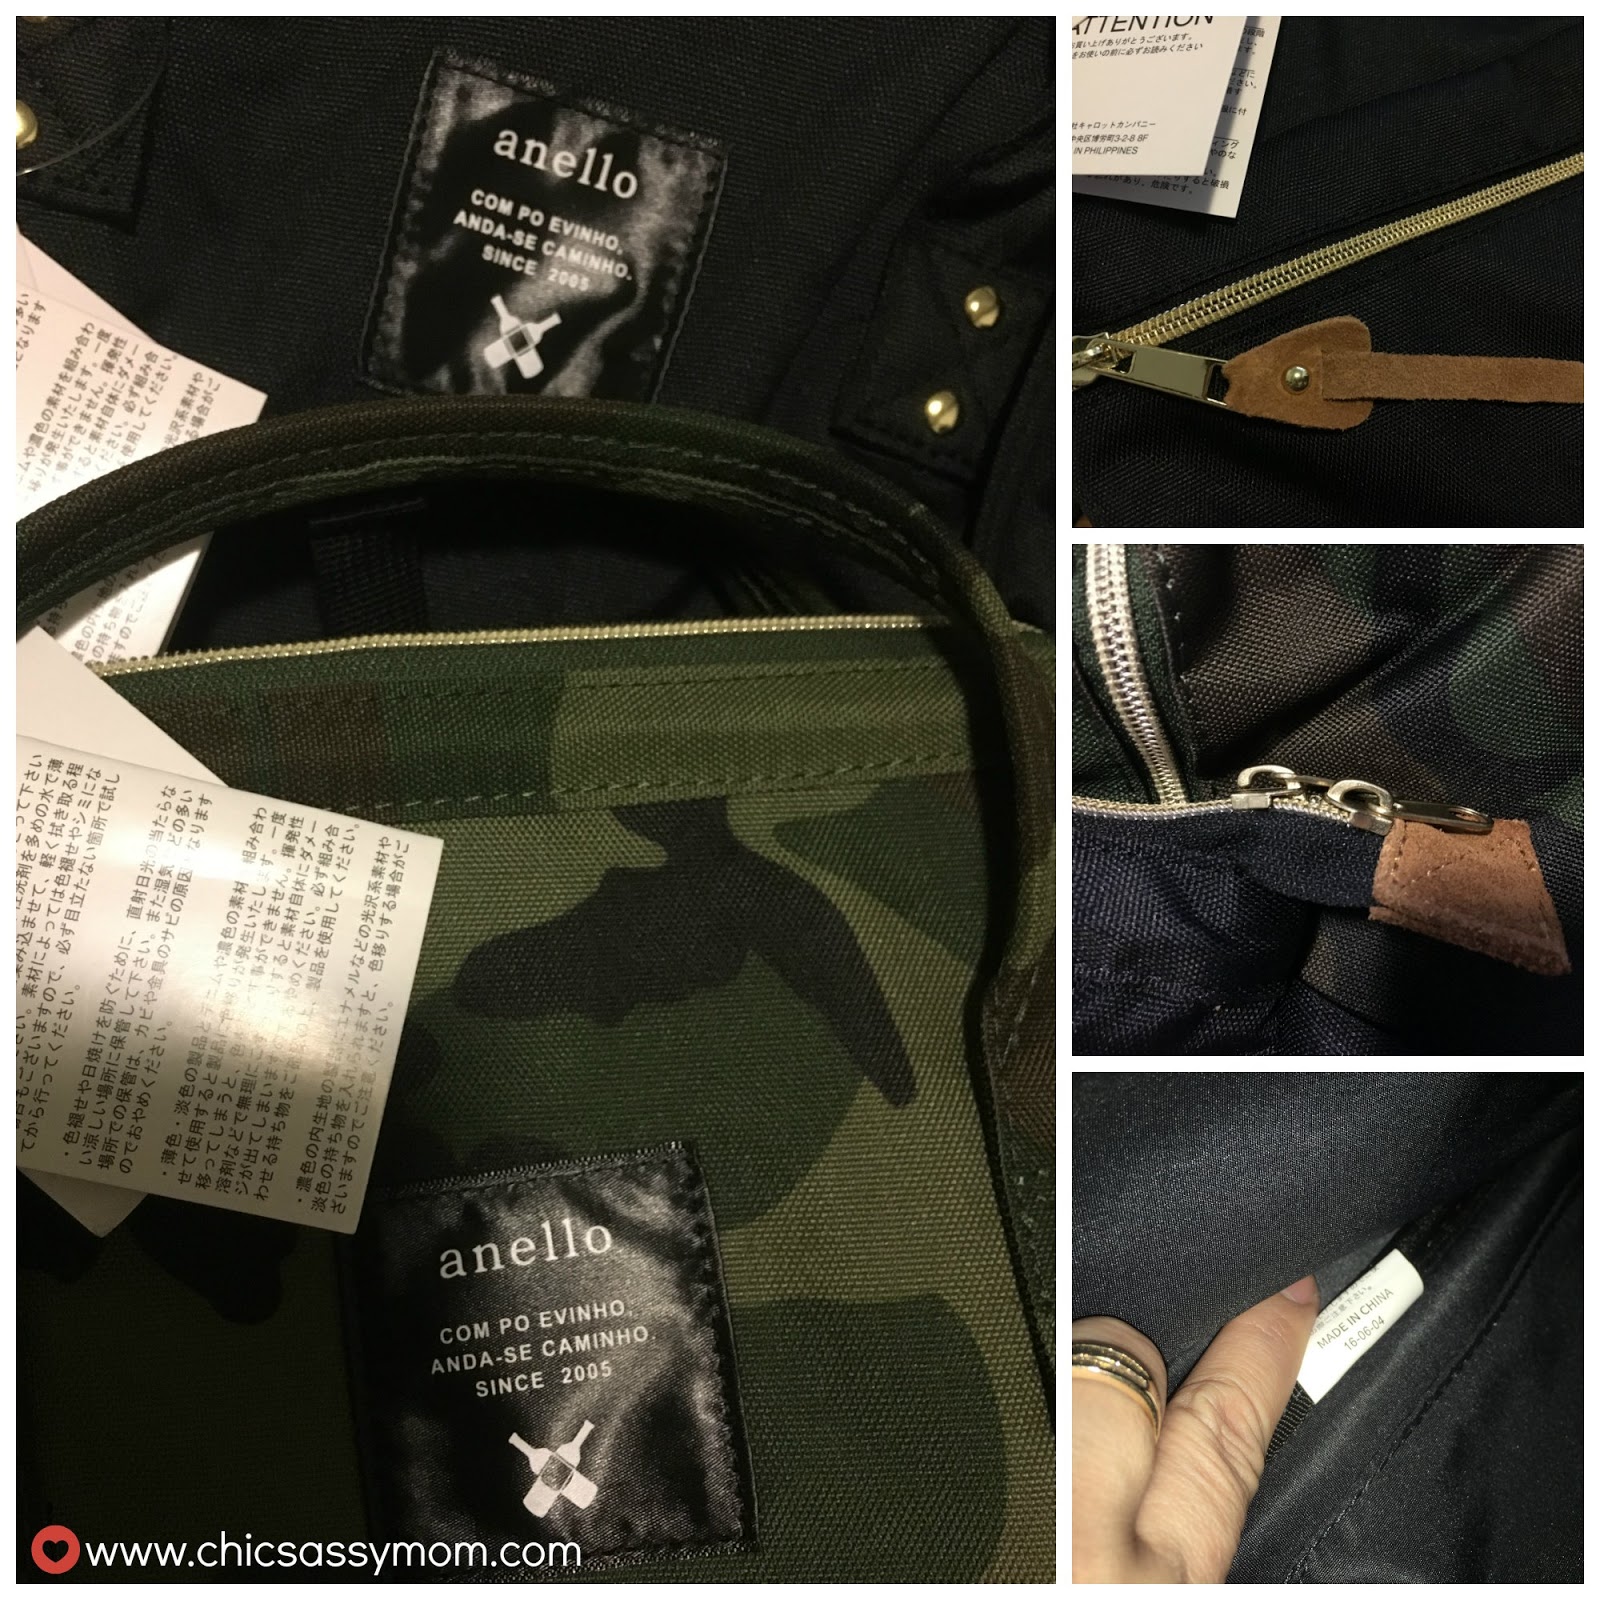 anello leather bag fake